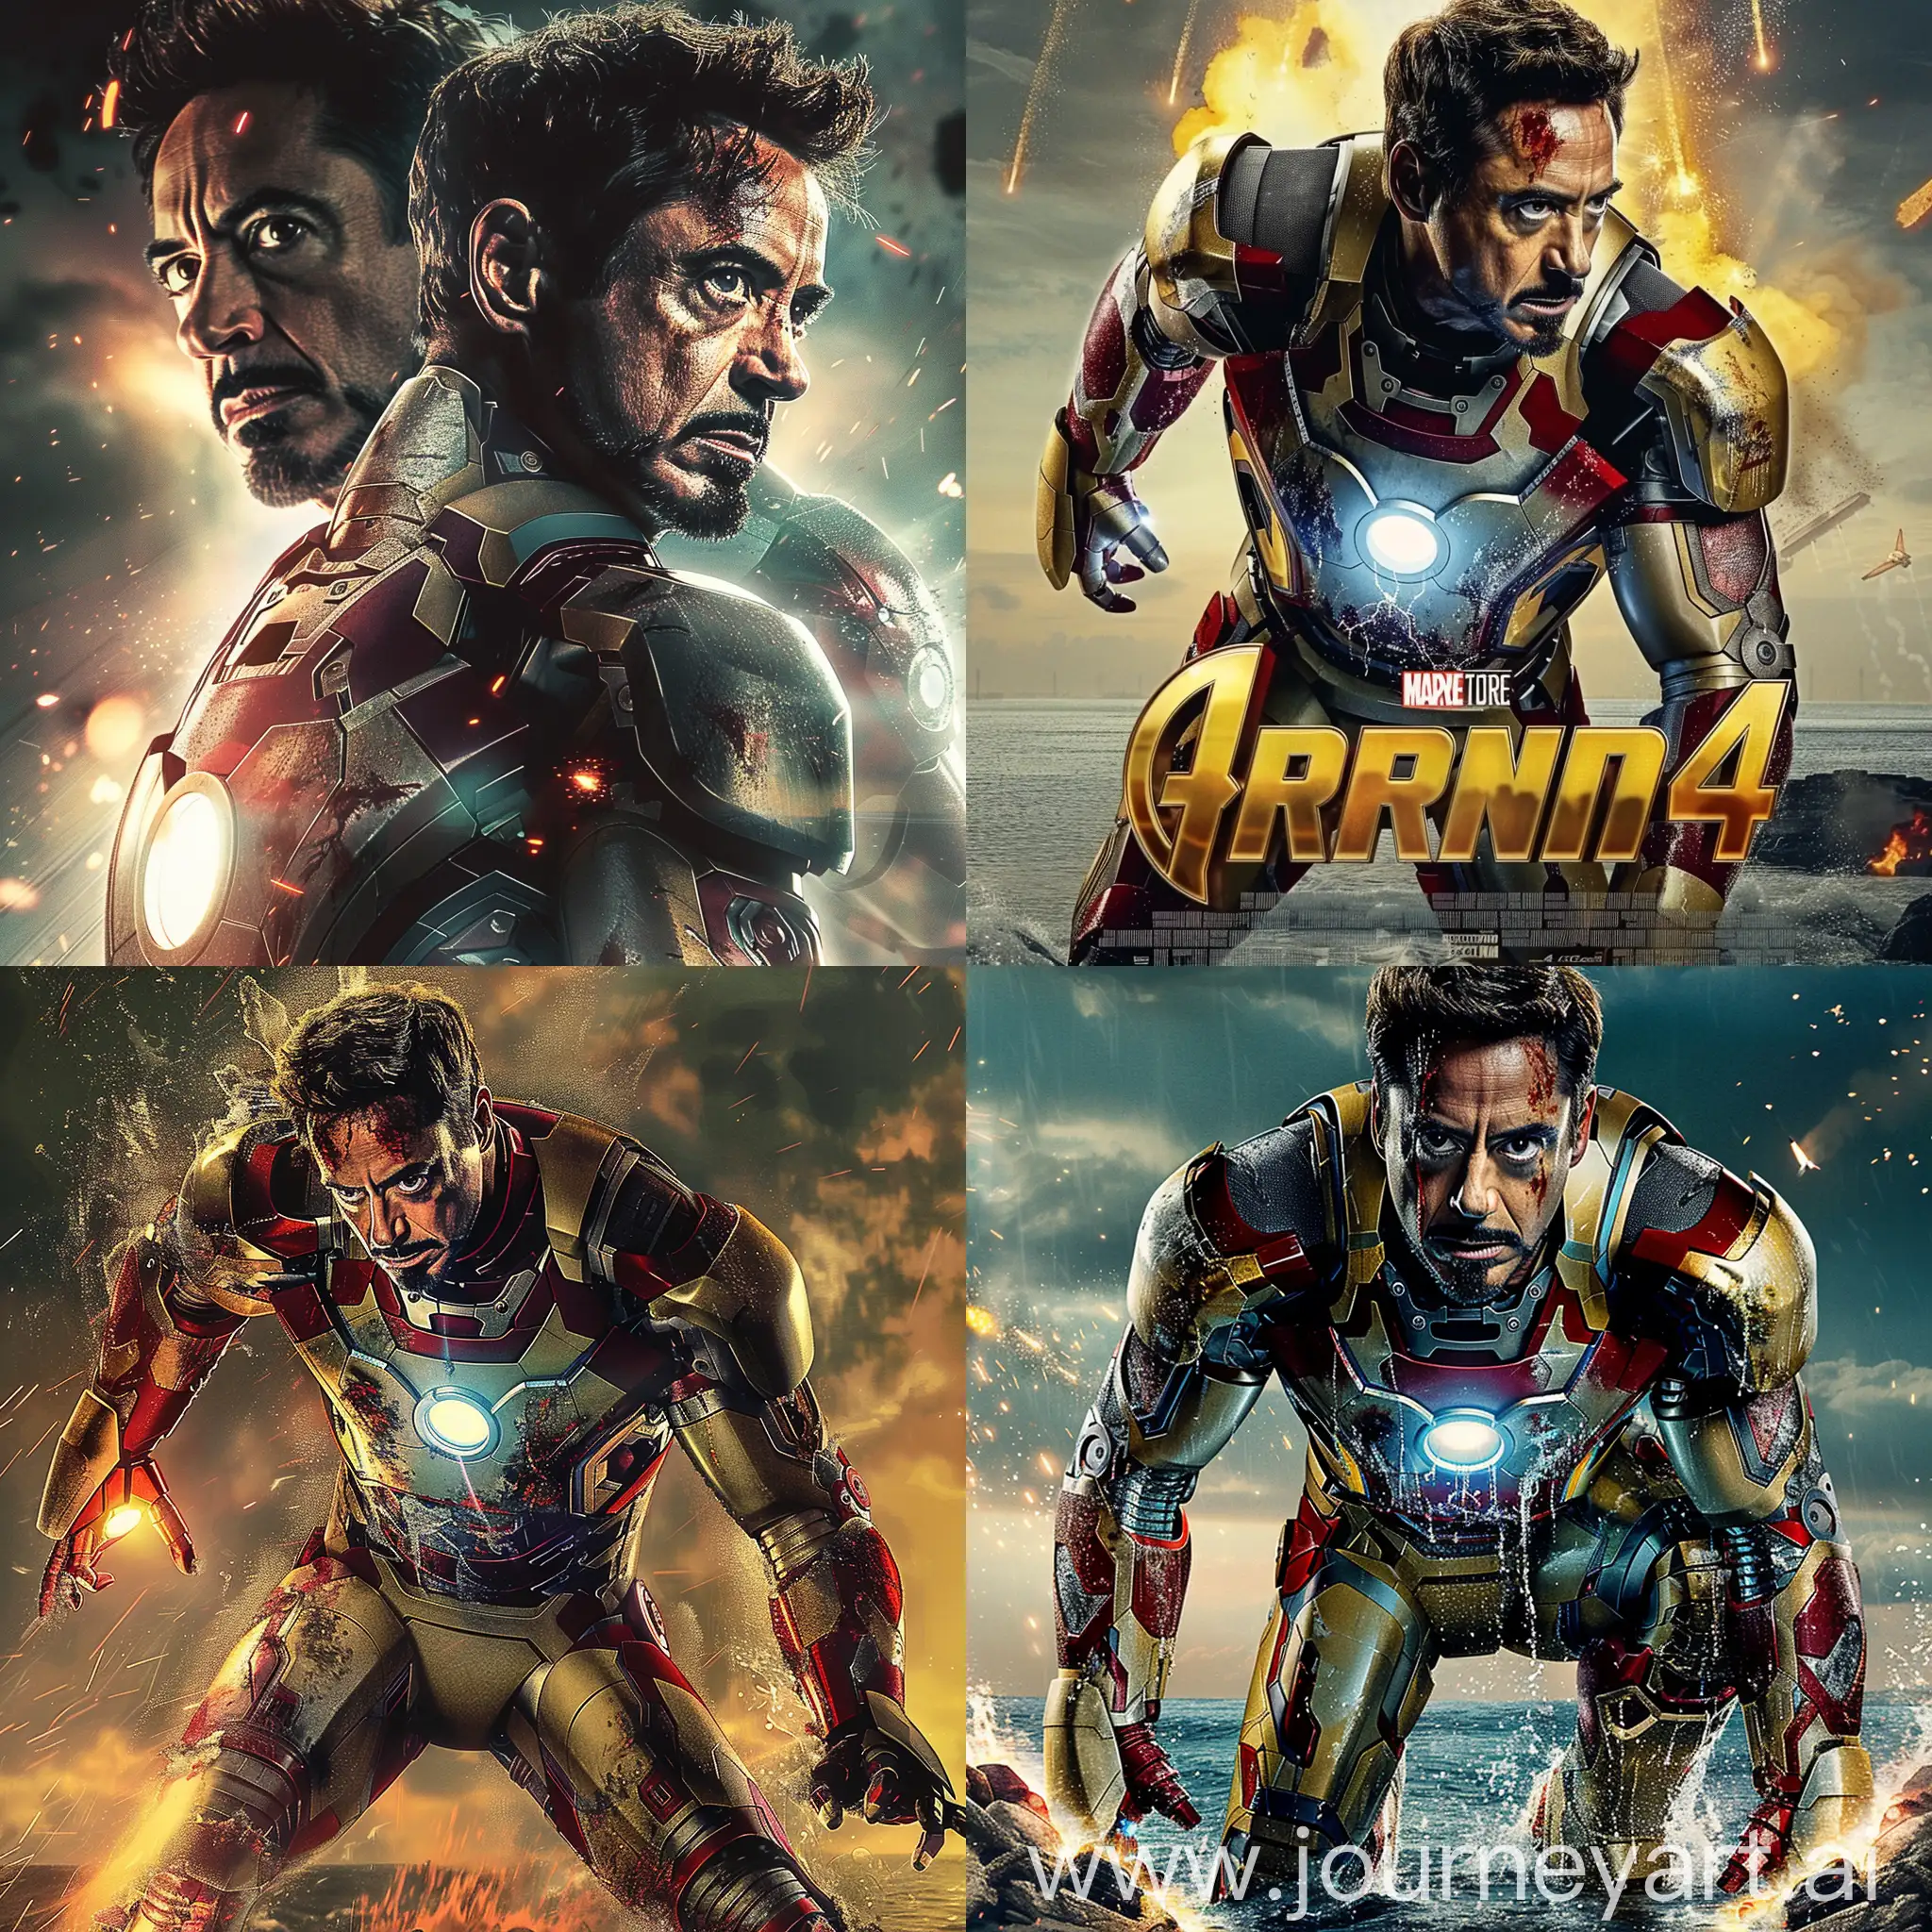 Iron-Man-4-Movie-Poster-Heroic-Tony-Stark-in-Futuristic-Armor